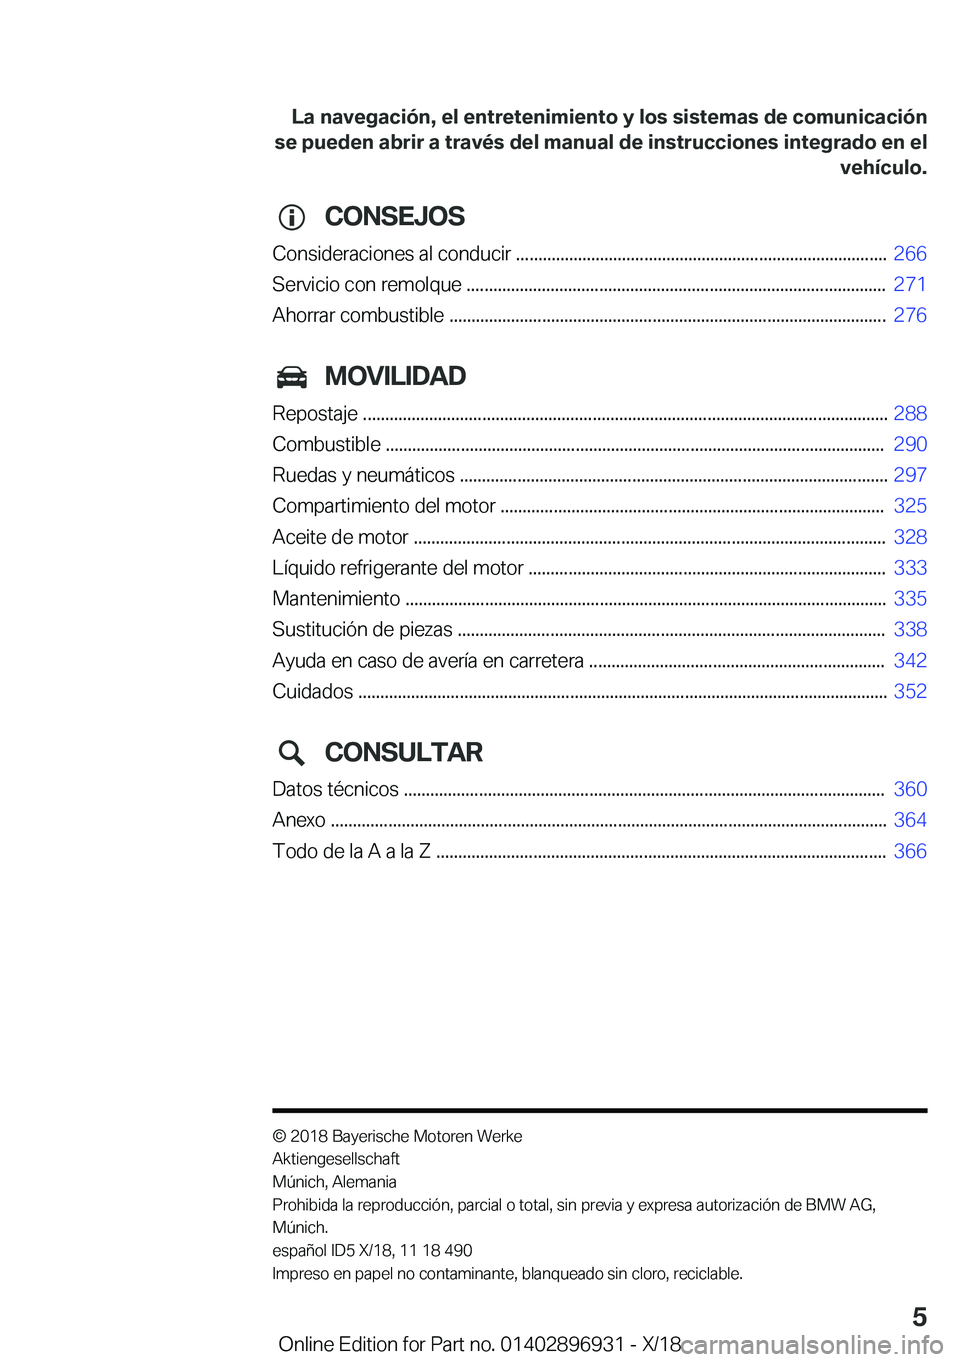 BMW 3 SERIES 2019  Manuales de Empleo (in Spanish) �C�O�N�S�E�J�O�S
�C�o�n�s�i�d�e�r�a�c�i�o�n�e�s��a�l��c�o�n�d�u�c�i�r��.�.�.�.�.�.�.�.�.�.�.�.�.�.�.�.�.�.�.�.�.�.�.�.�.�.�.�.�.�.�.�.�.�.�.�.�.�.�.�.�.�.�.�.�.�.�.�.�.�.�.�.�.�.�.�.�.�.�.�.�.�.�.�